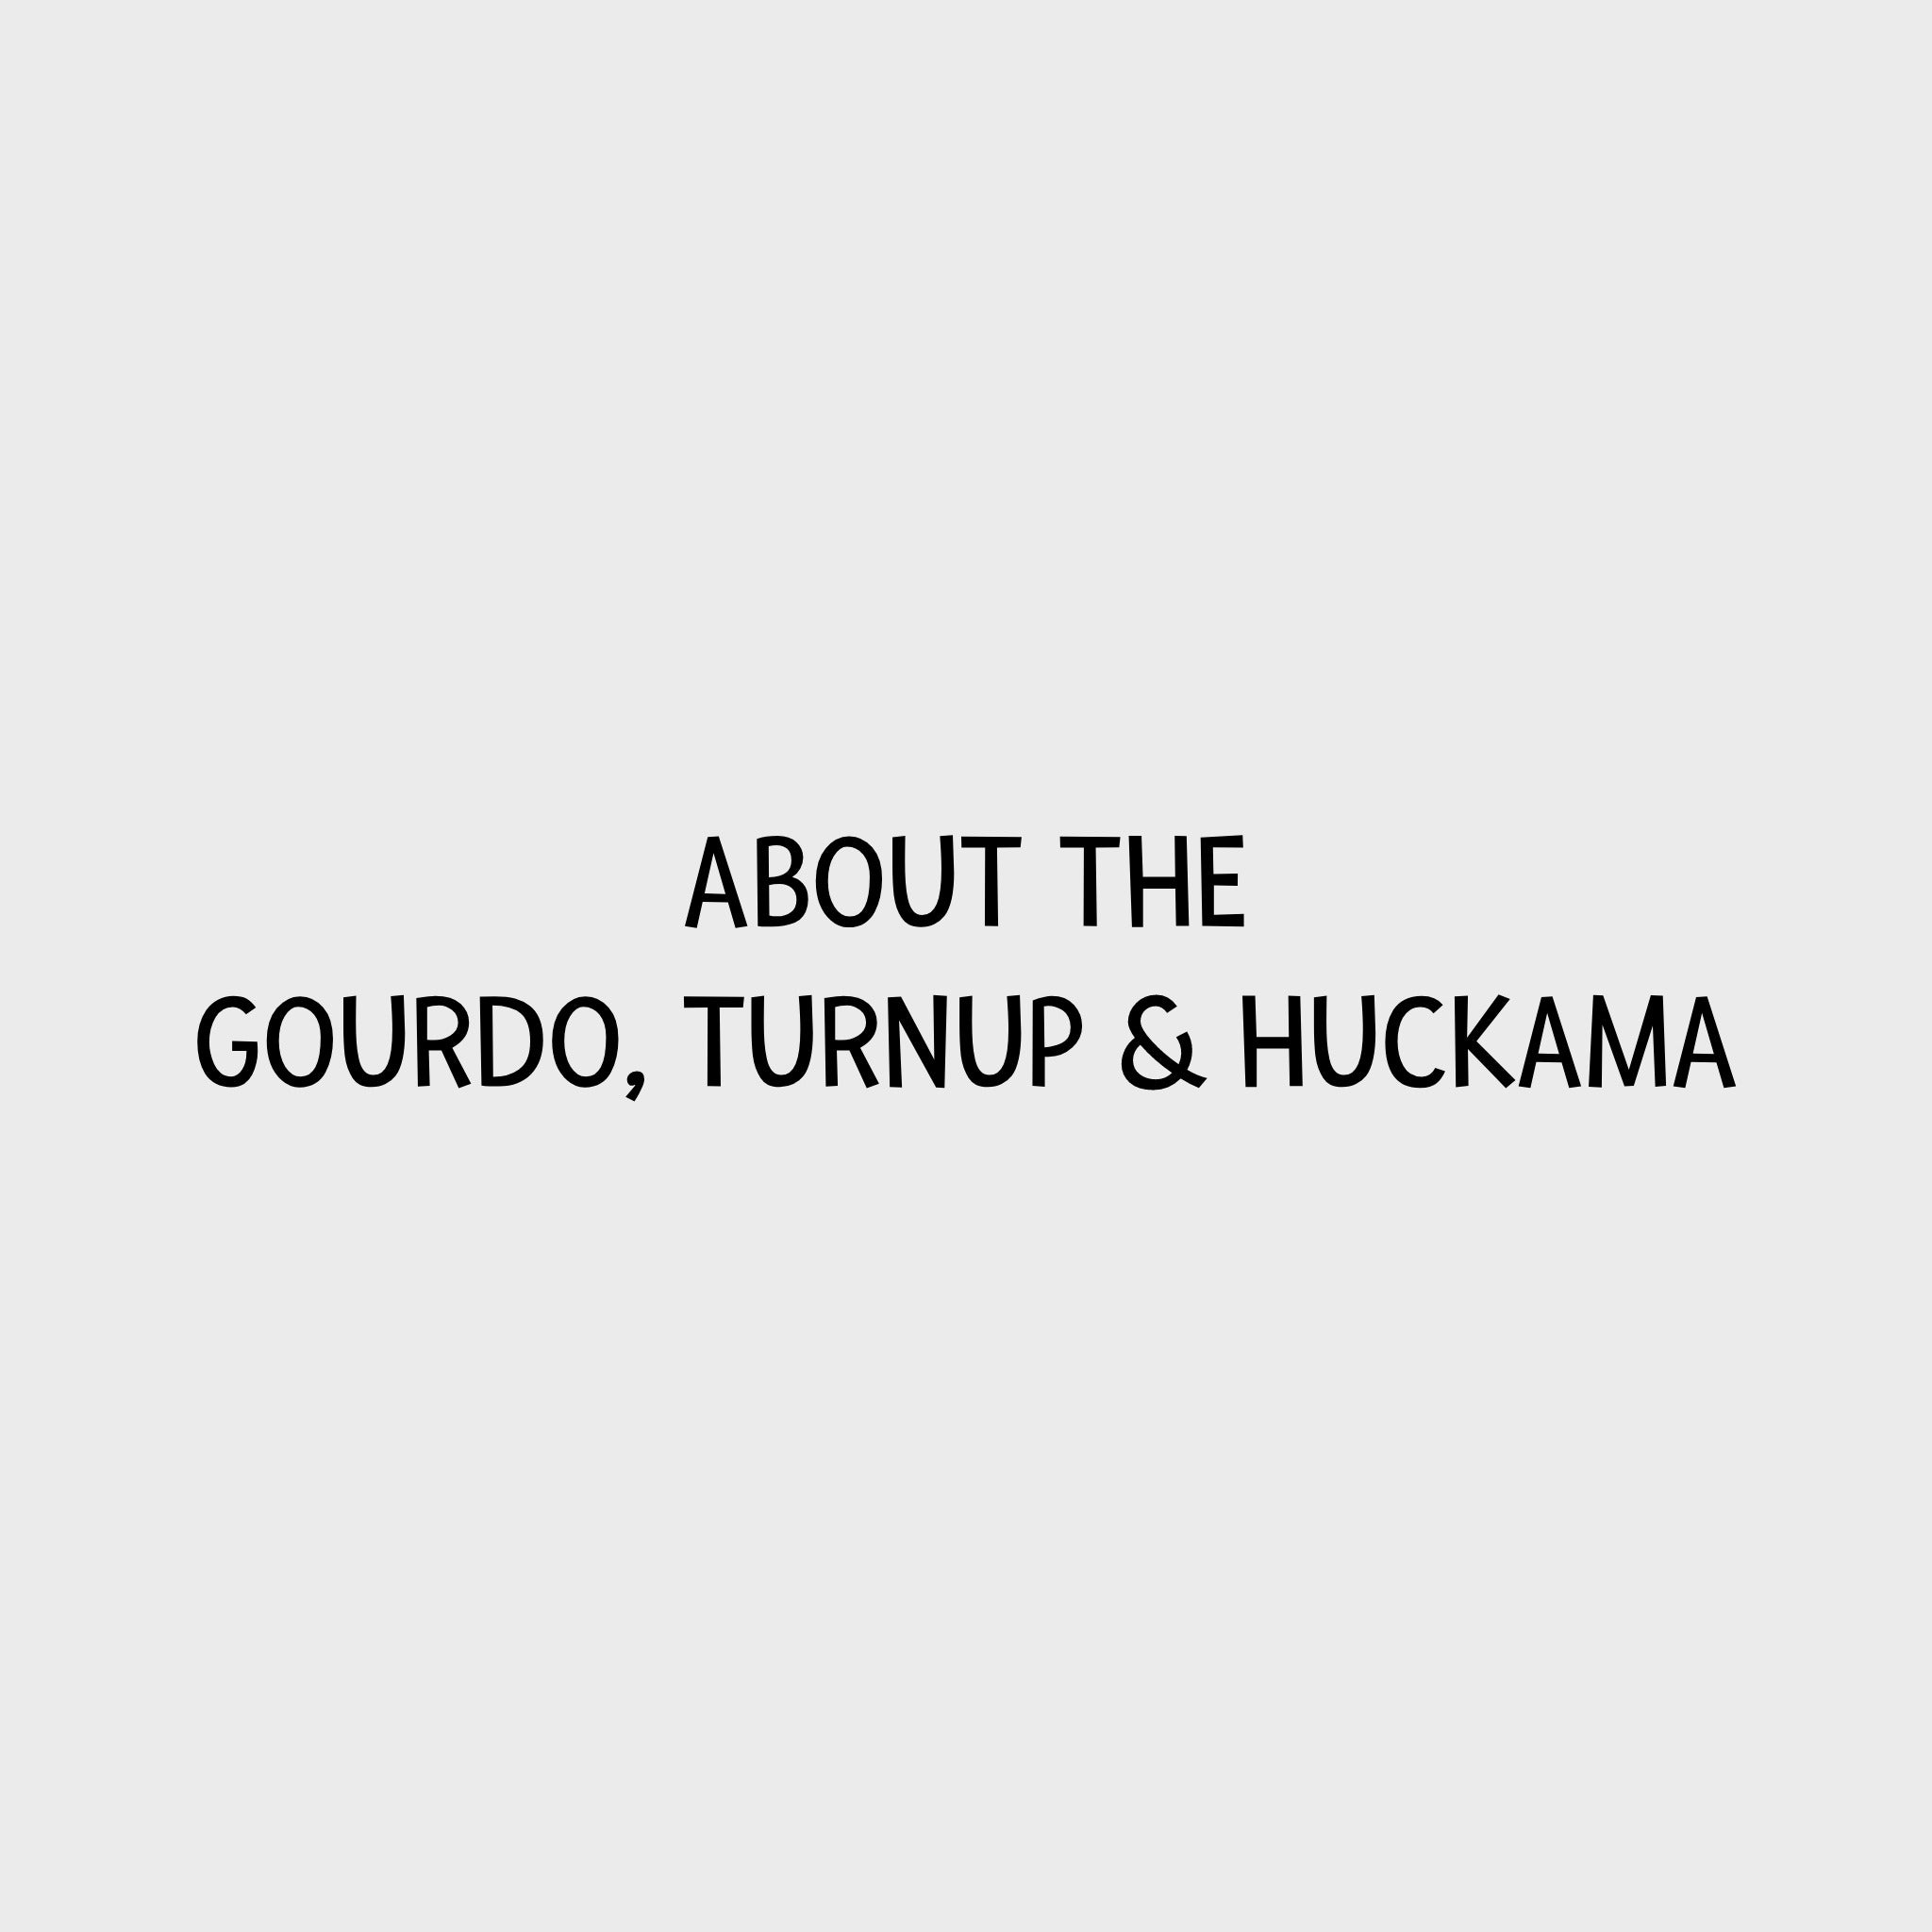 Video - Ruffwear Gourdo, Turnup & Huckama